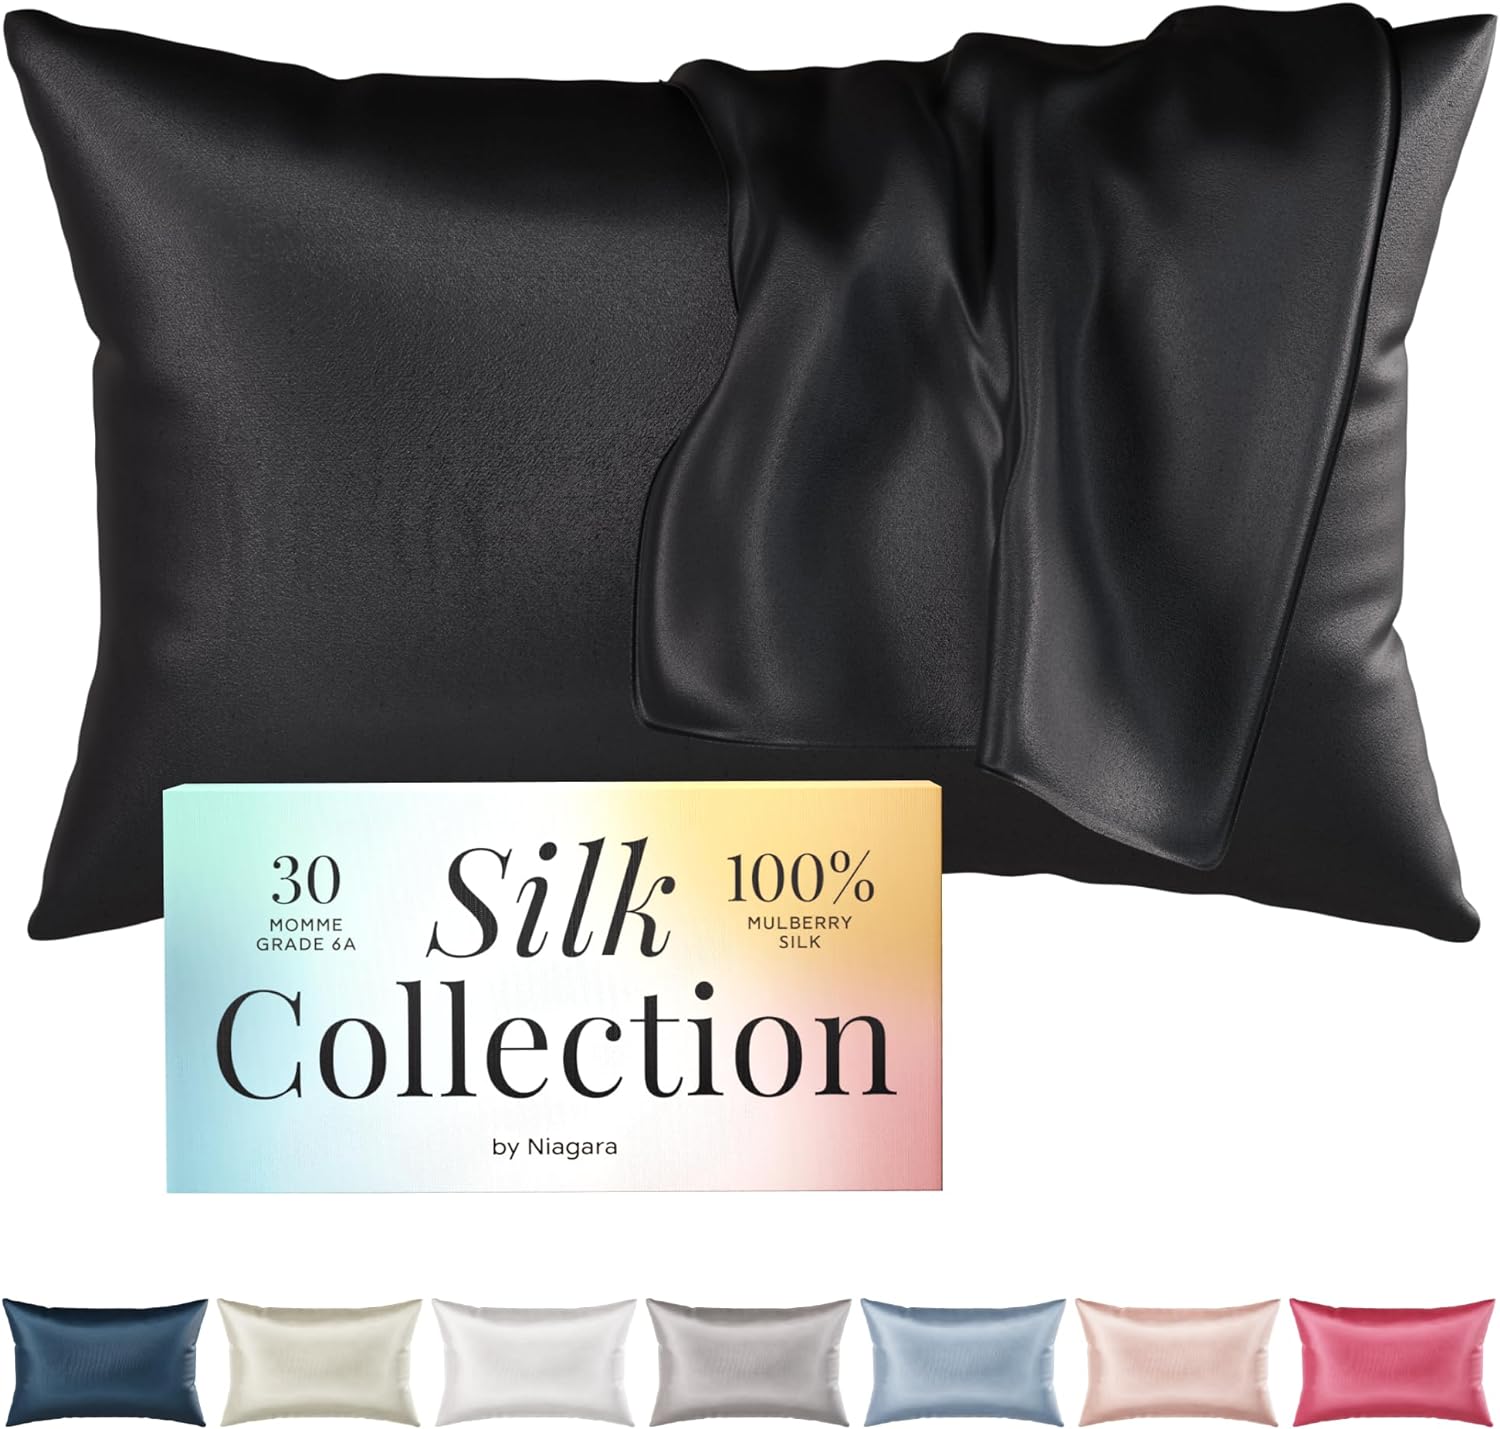 Niagara 100% Mulberry Silk Pillowcase - 30 Momme Silk Pillow case for Hair and Skin - Grade 6A Silk Pillow Cases with Zipper - Soft & Cooling Black Silk Pillowcase Queen Size (20x30)